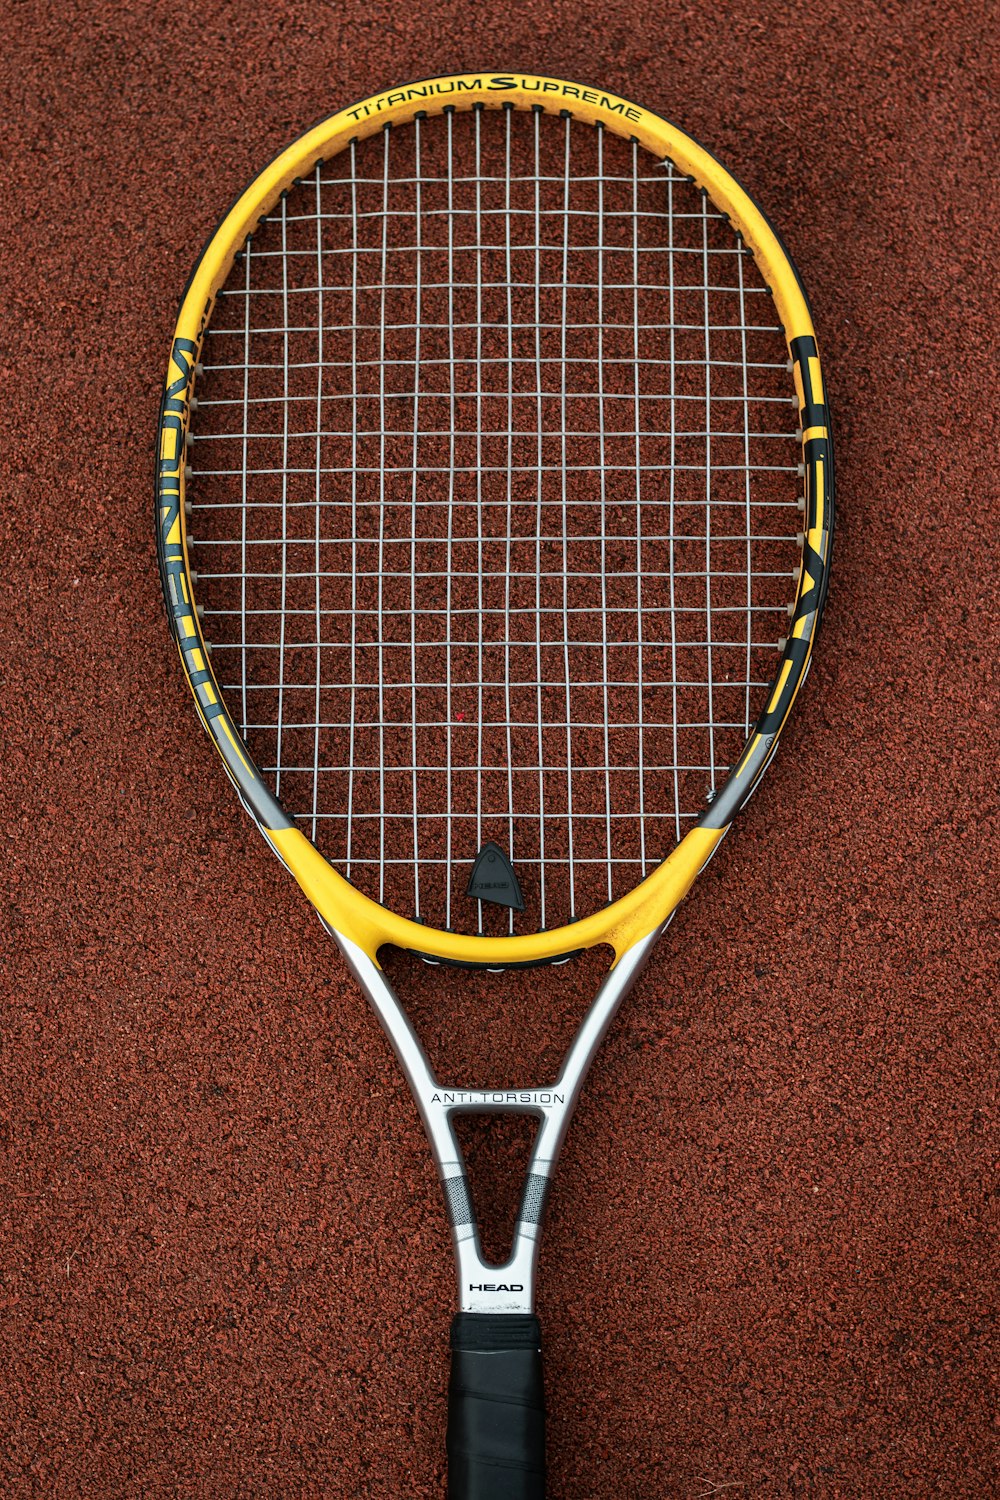 yellow and white badminton racket